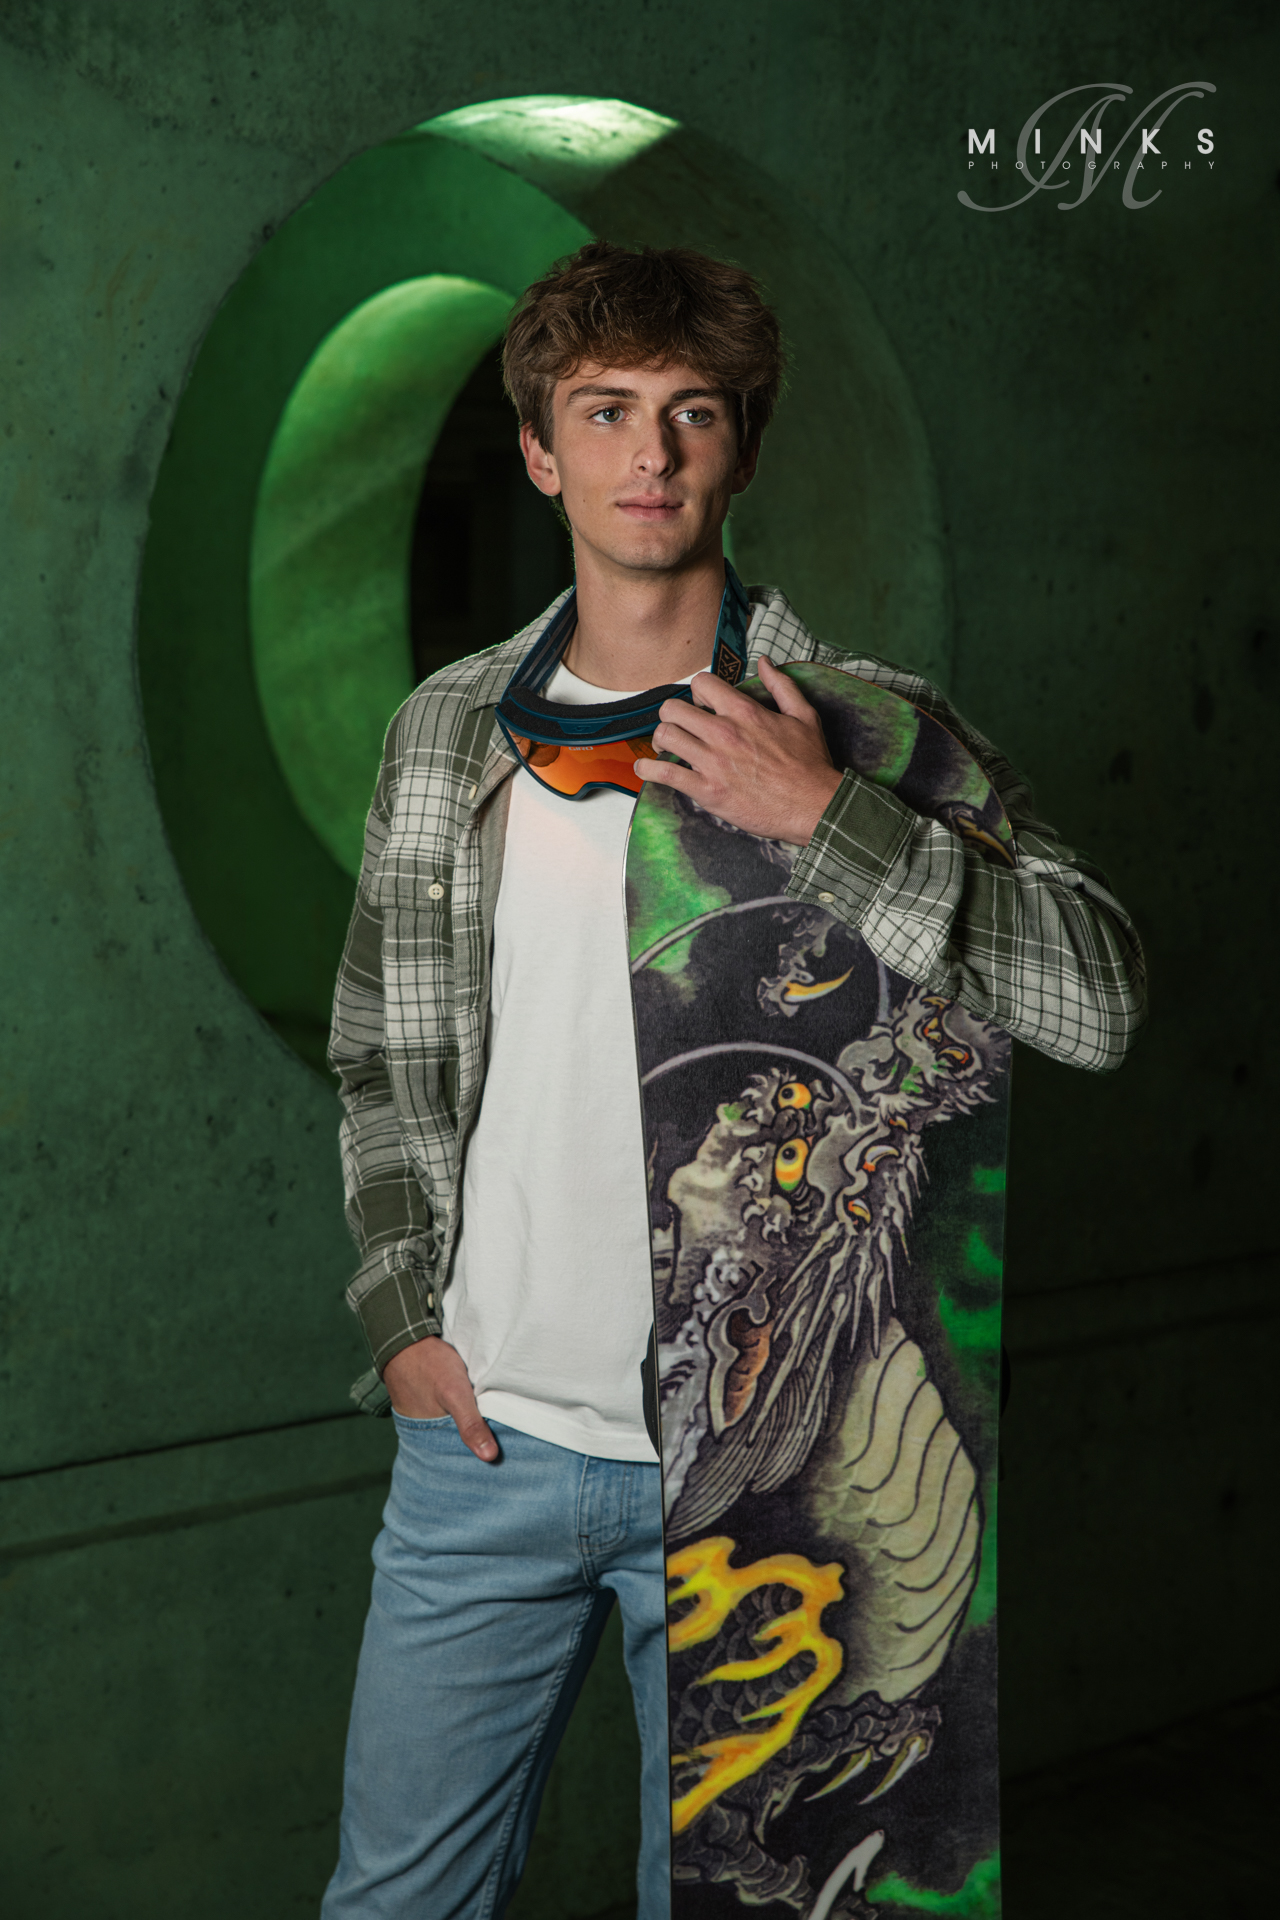 high school senior guy holding his snowboard